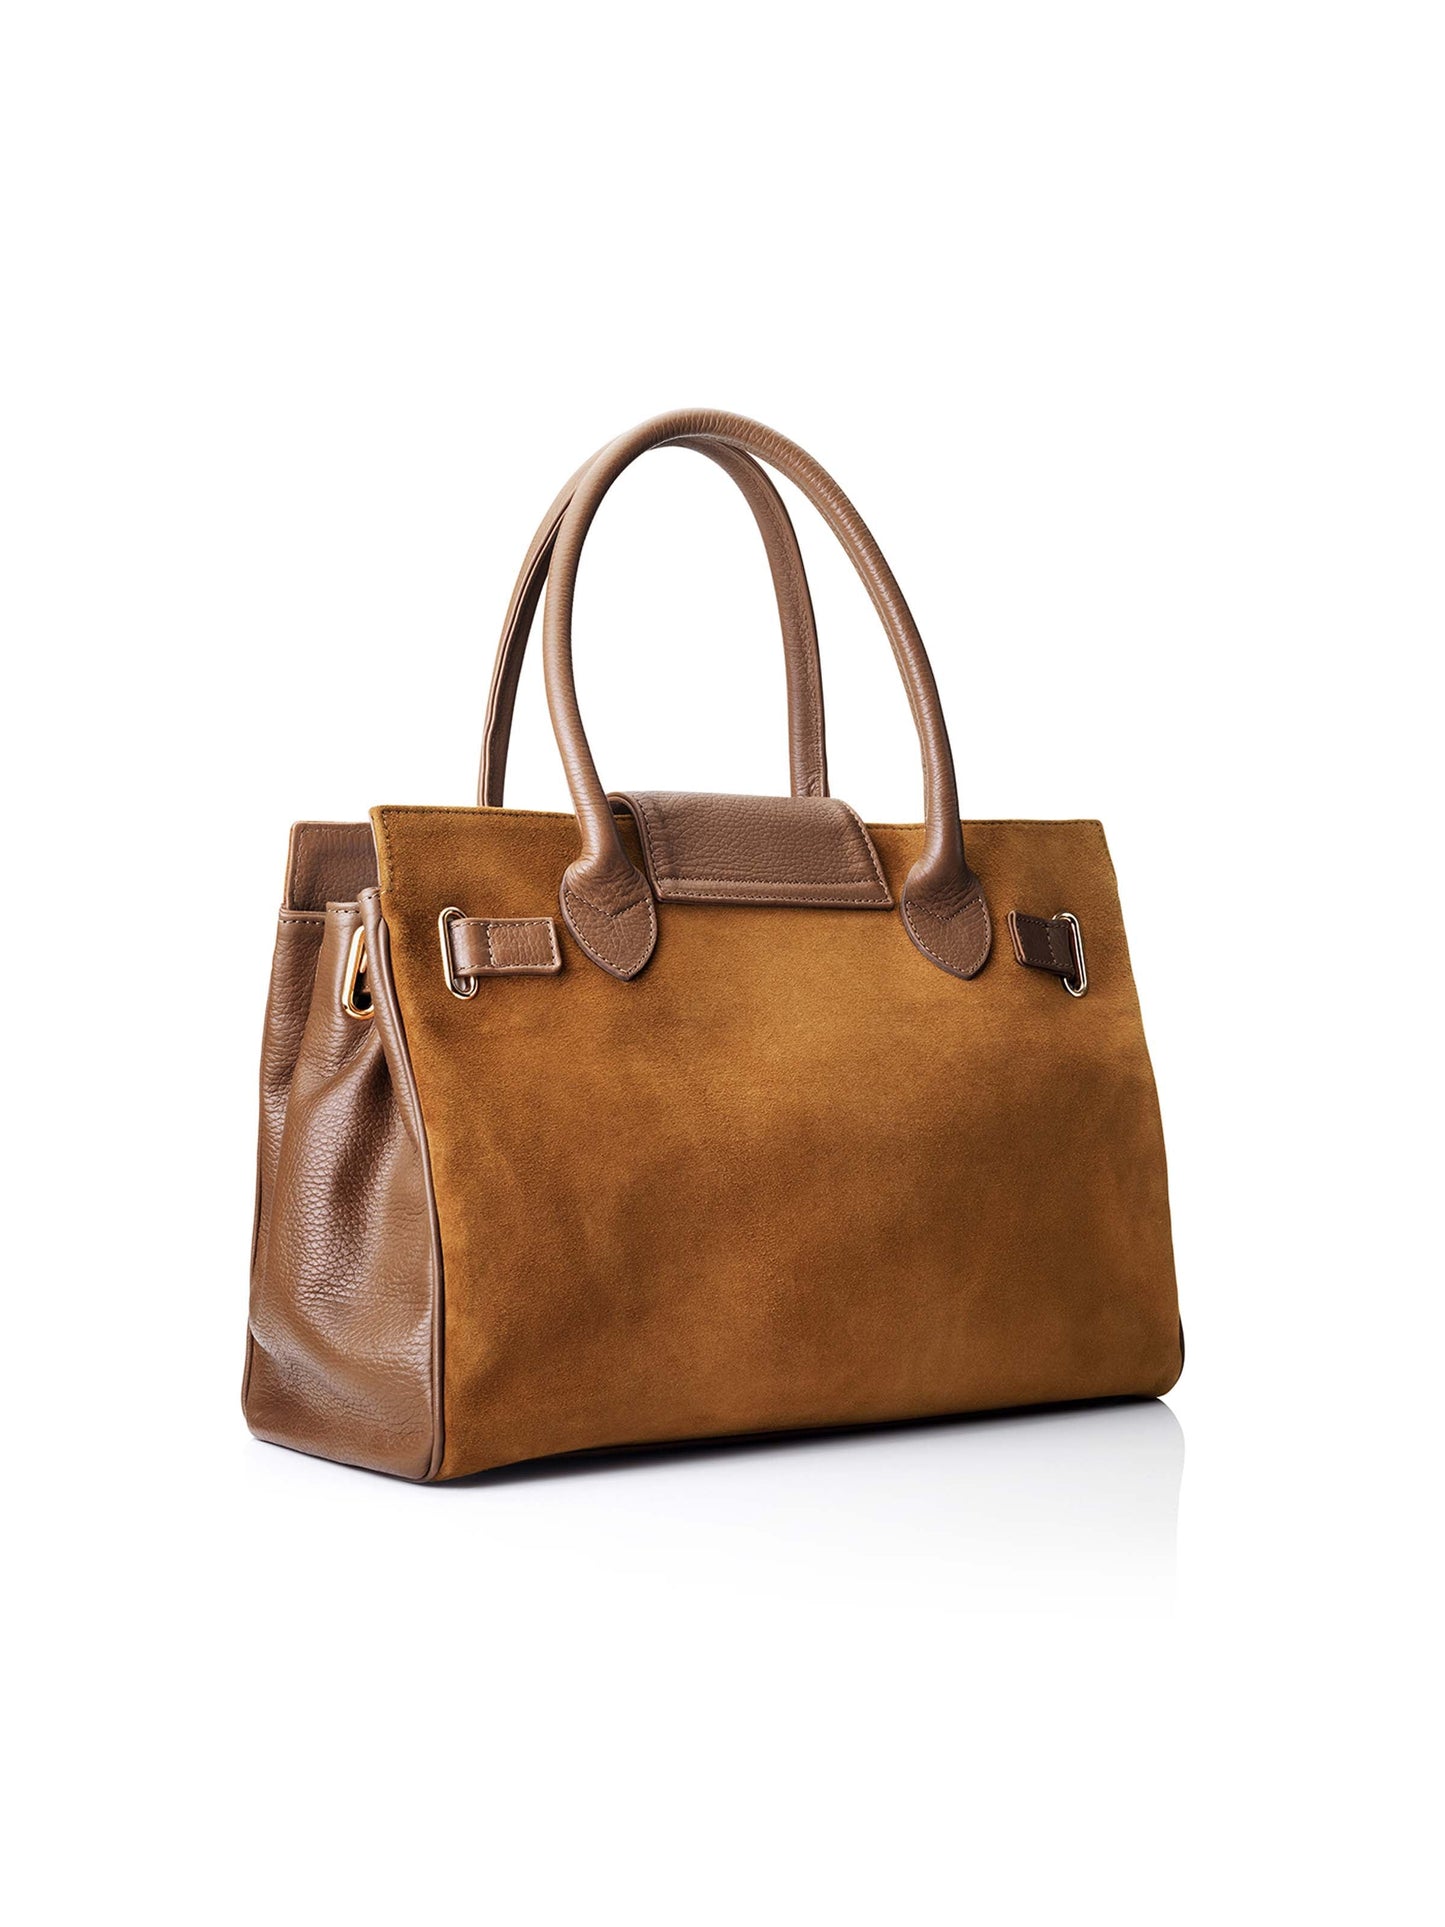 The Windsor Handbag - Tan Suede